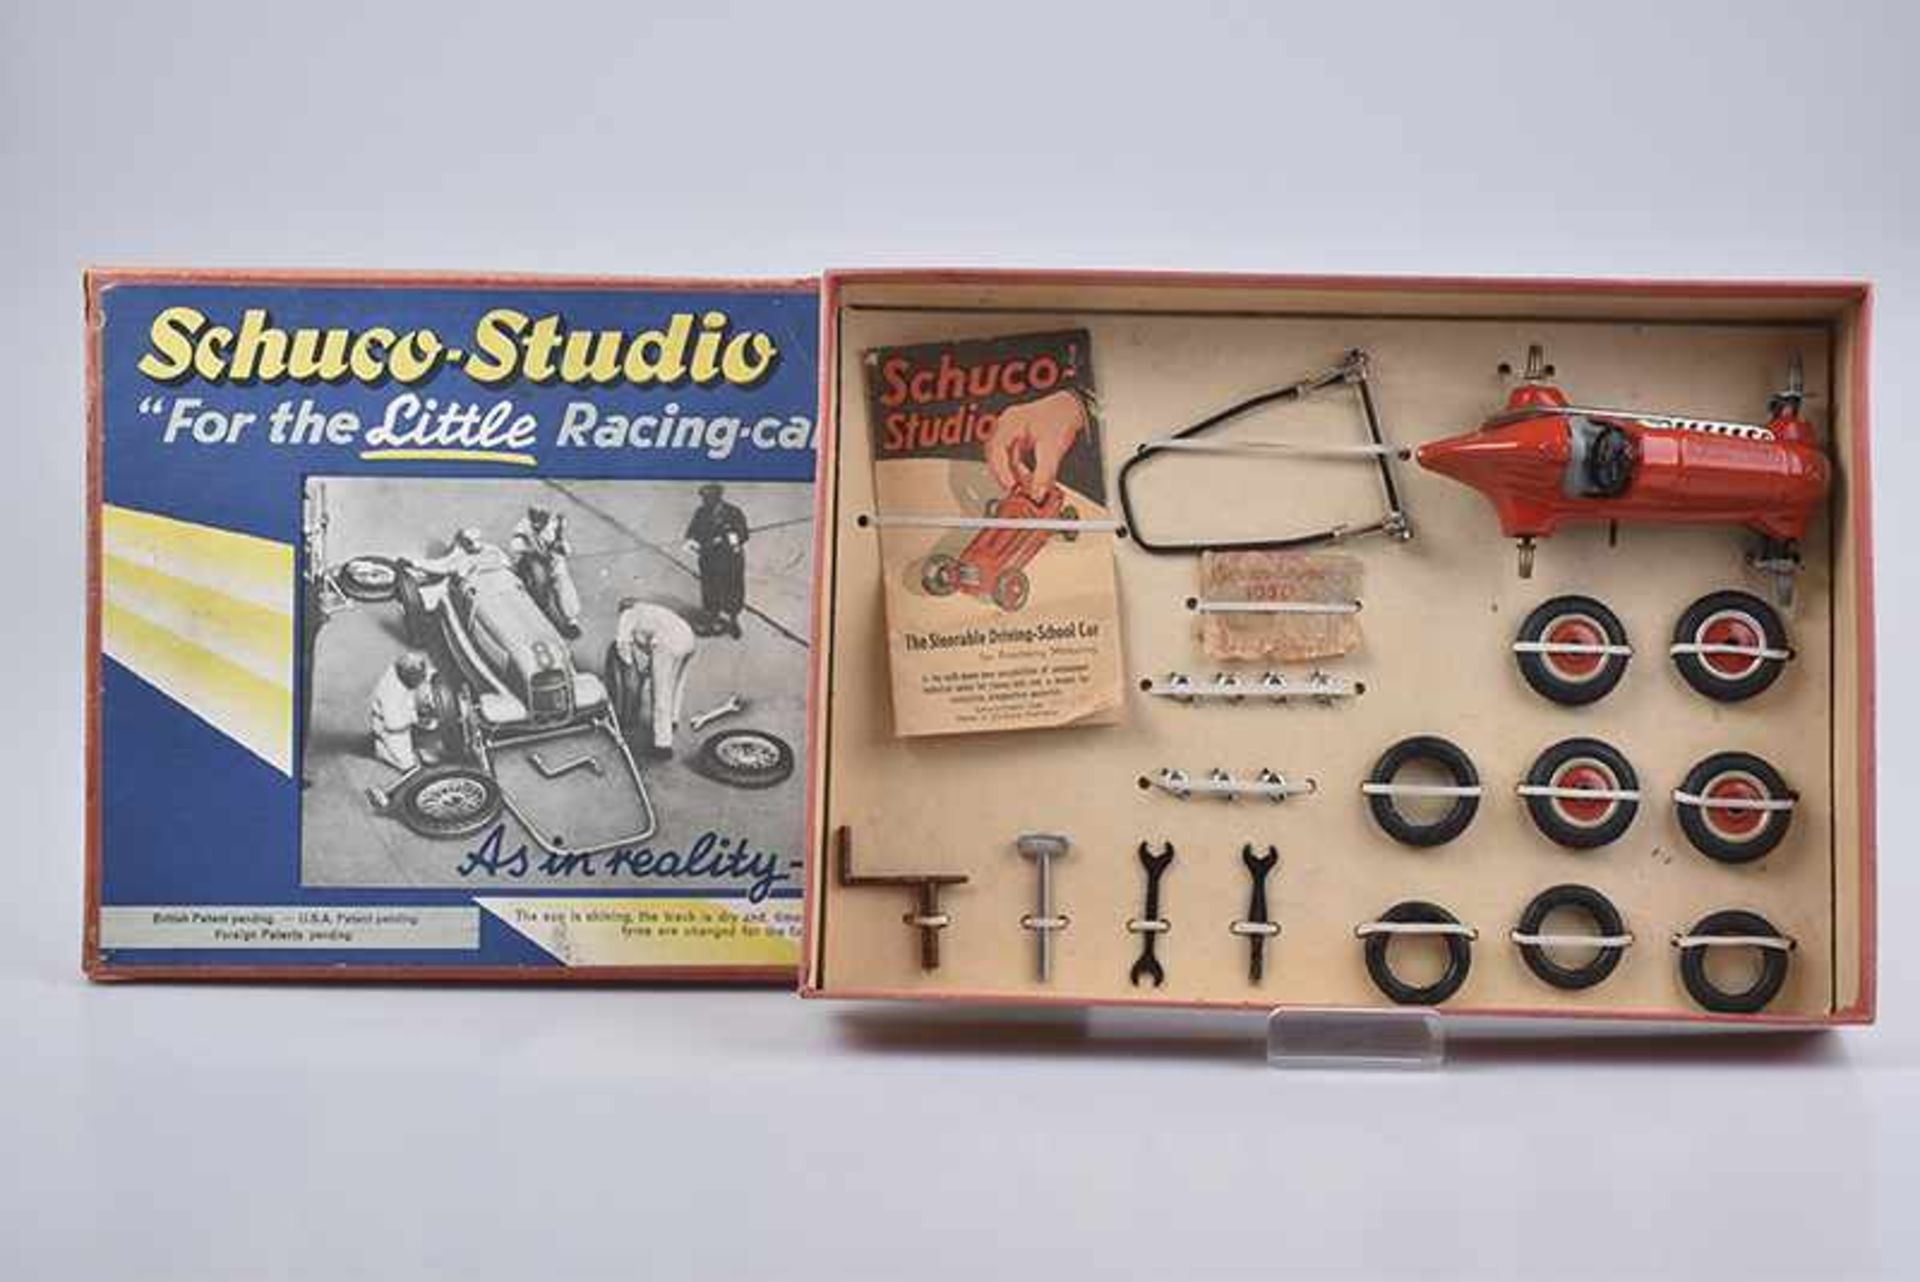 SCHUCO 1060 Studio Baukasten, 1953, Made in US-Zone Germany, U.S.A Patent, Blech, Schuco Studio "For